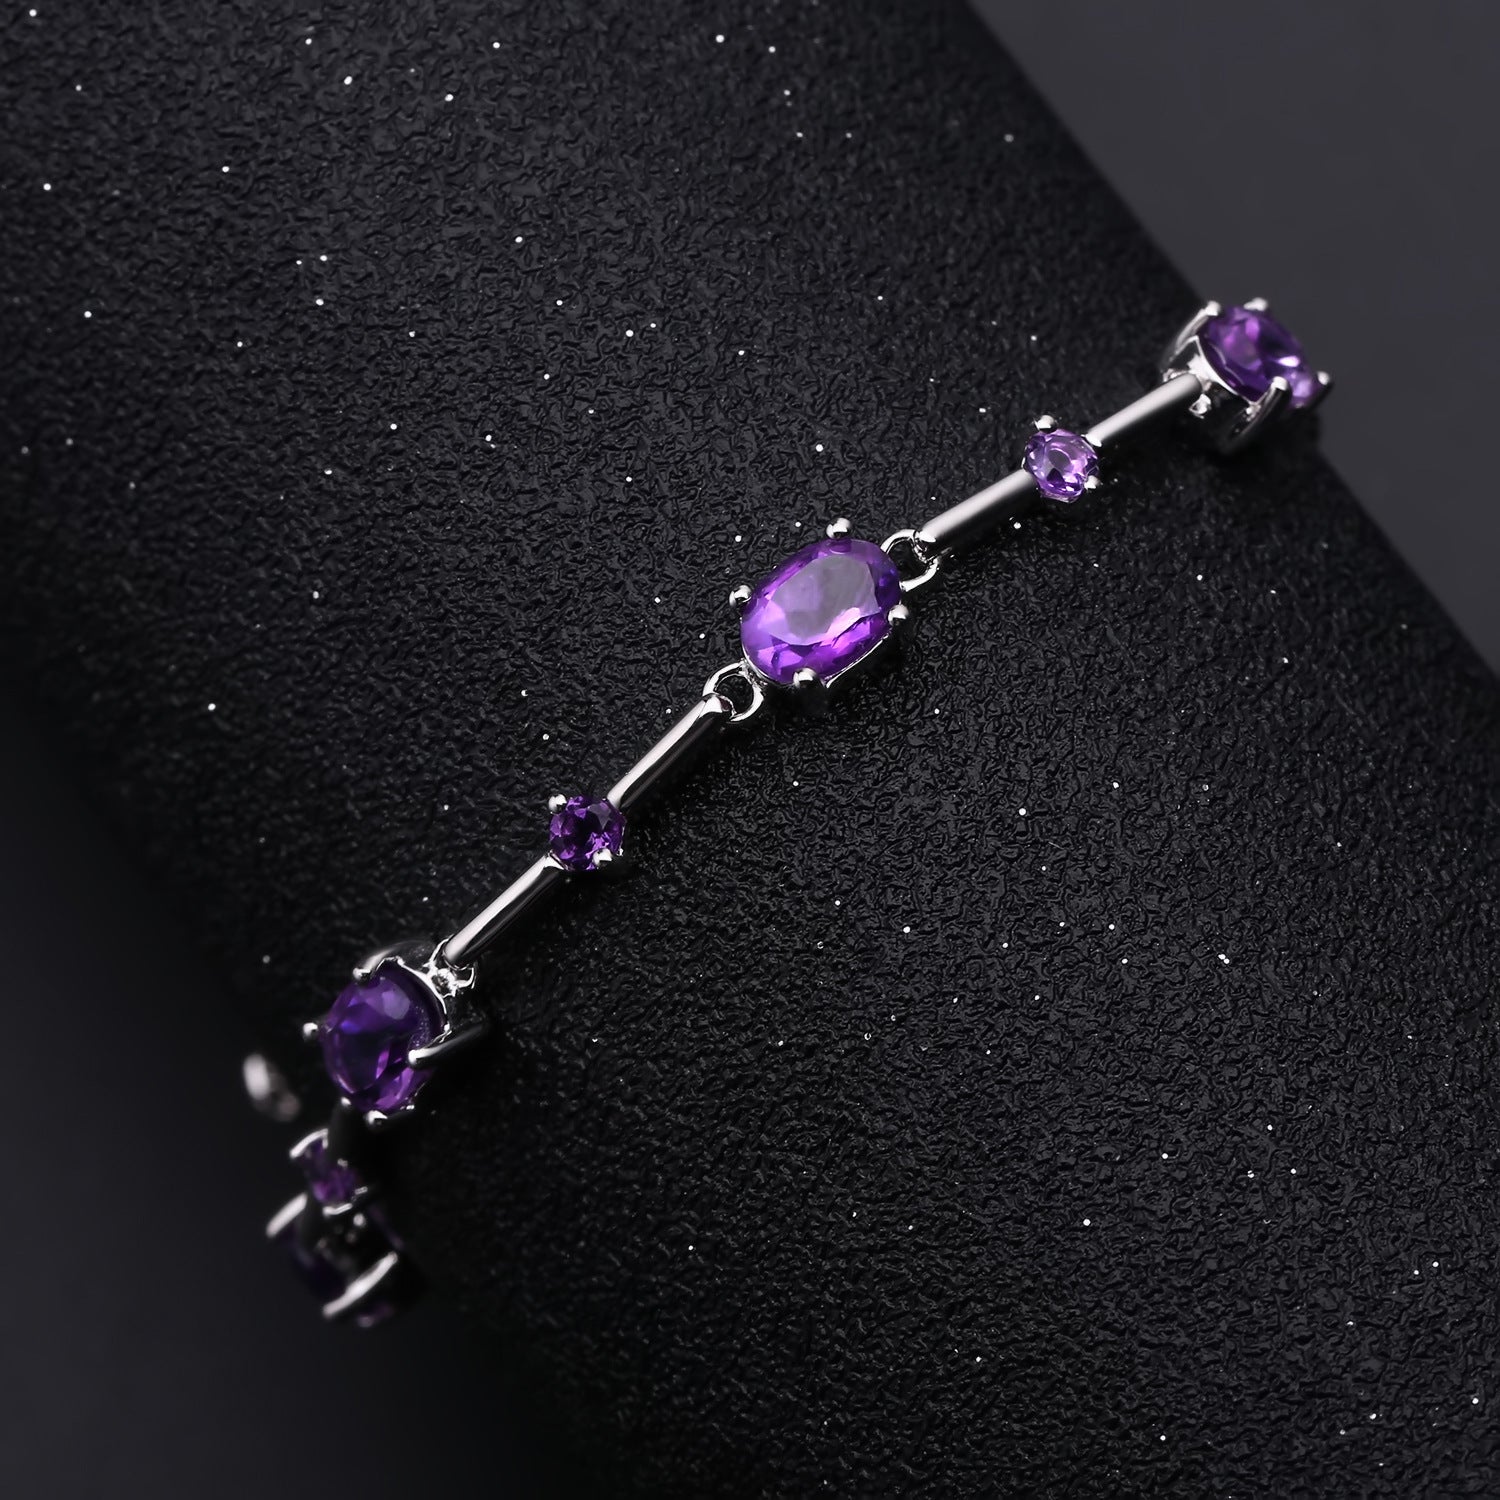 European Purple Color Crystal S925 Silver Bracelet for Women